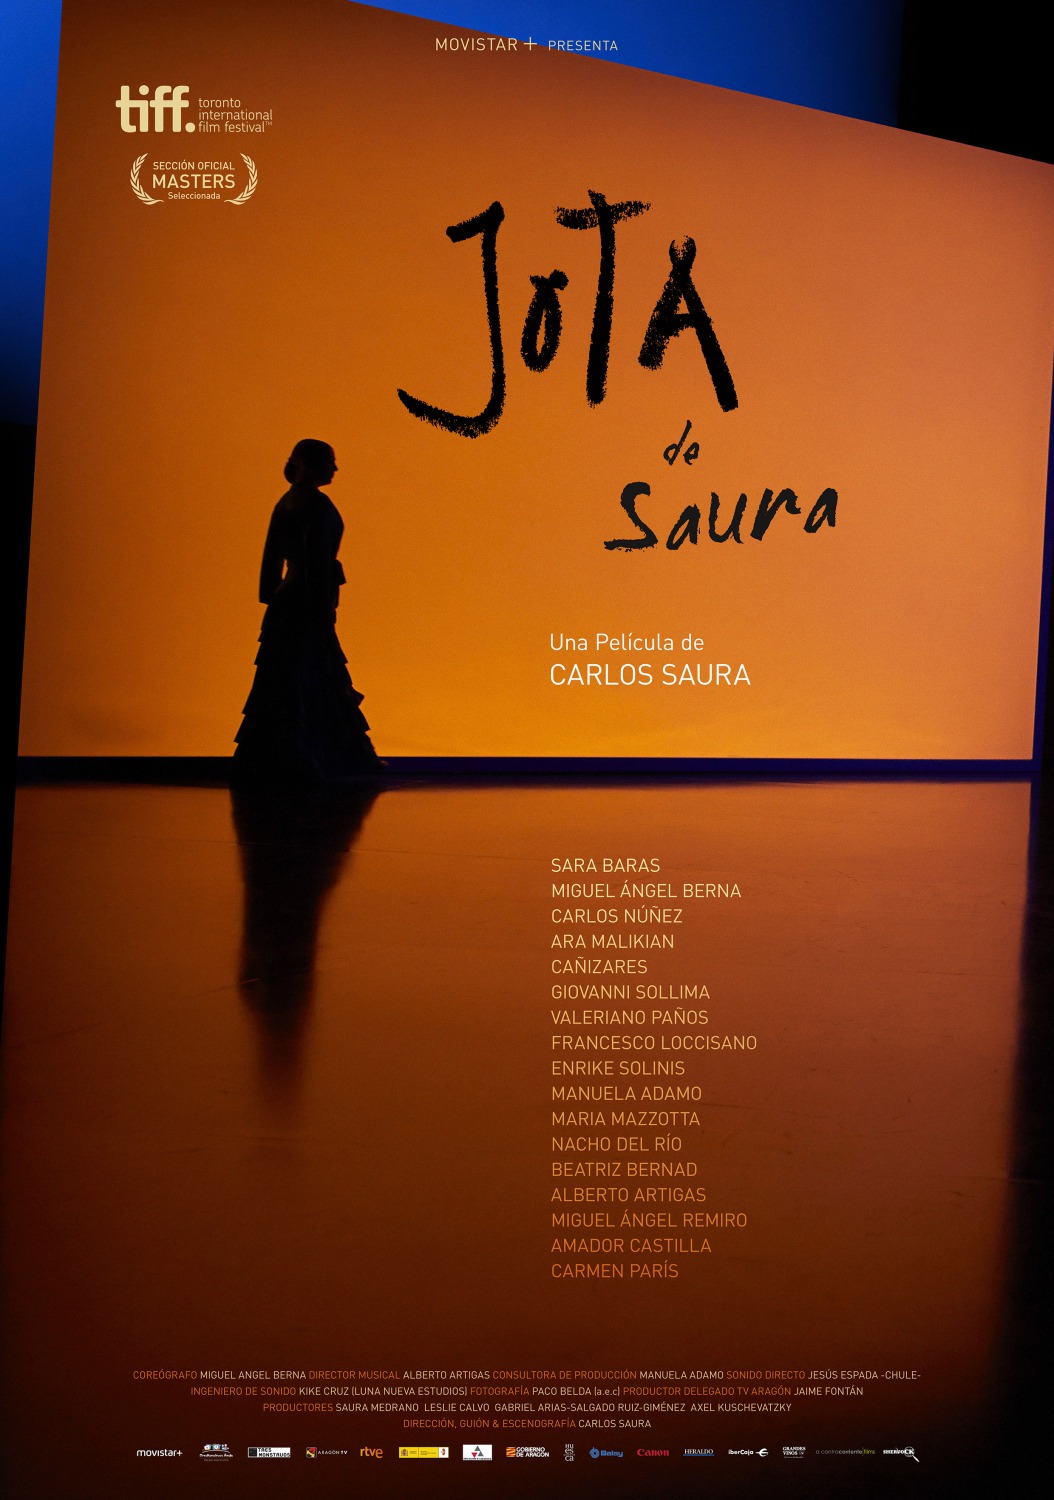 Extra Large Movie Poster Image for Jota de Saura 